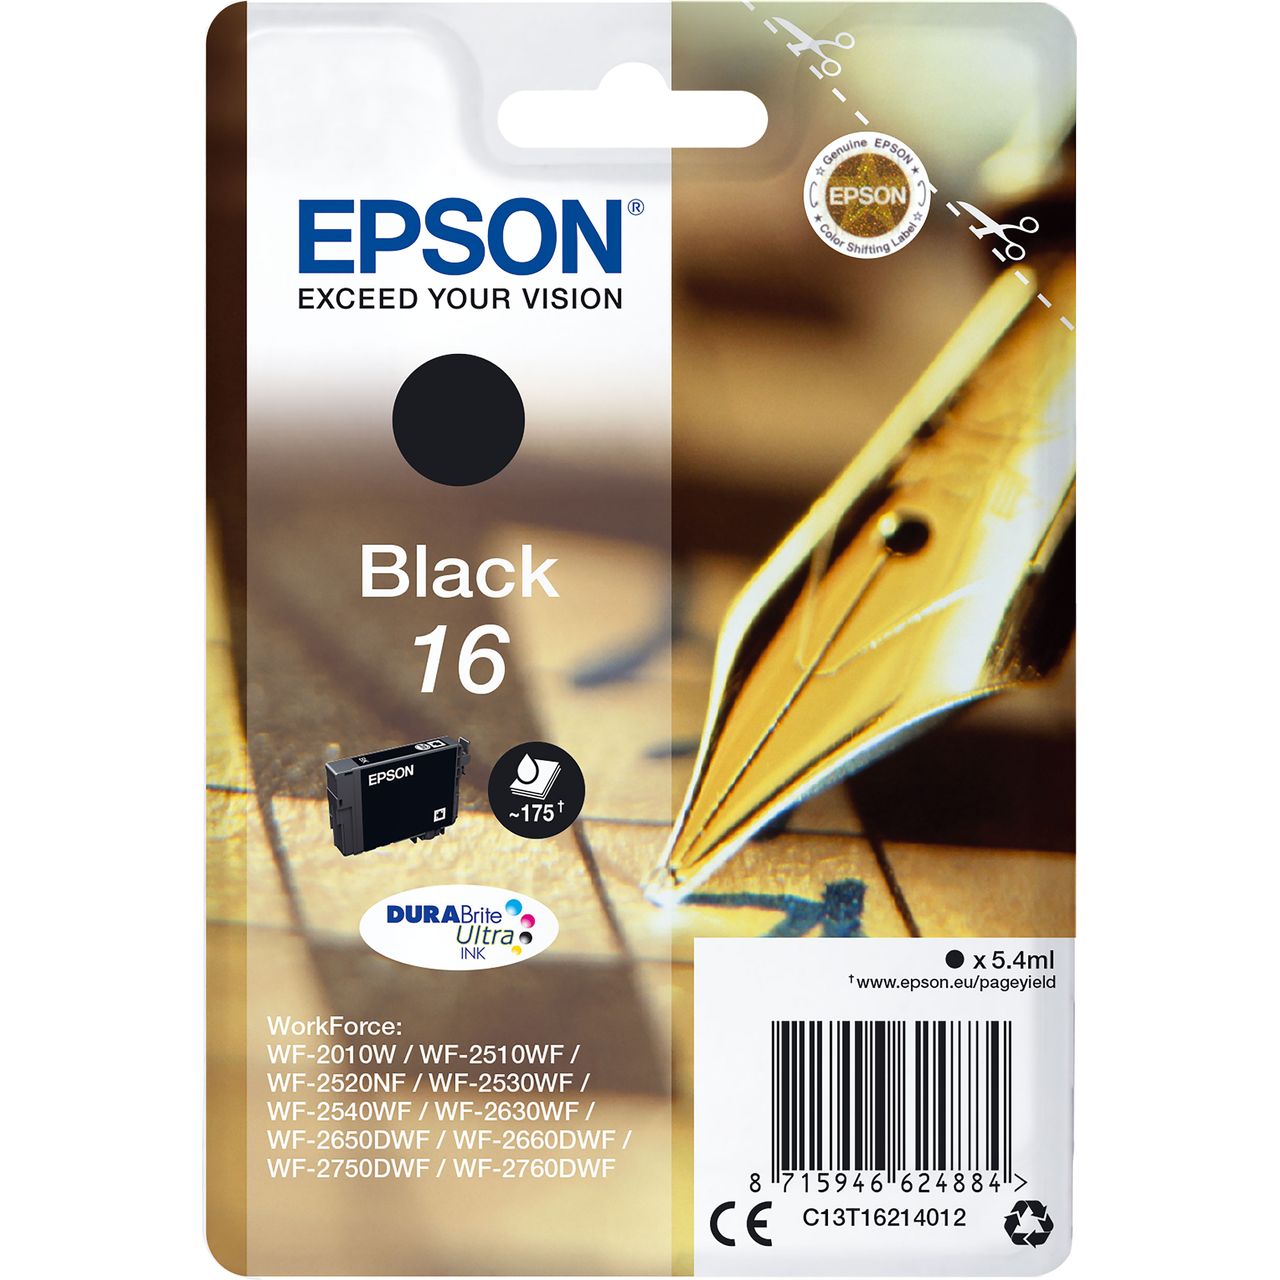 Epson Pen & Crossword Singlepack Black 16 DURABrite Ultra Ink Review